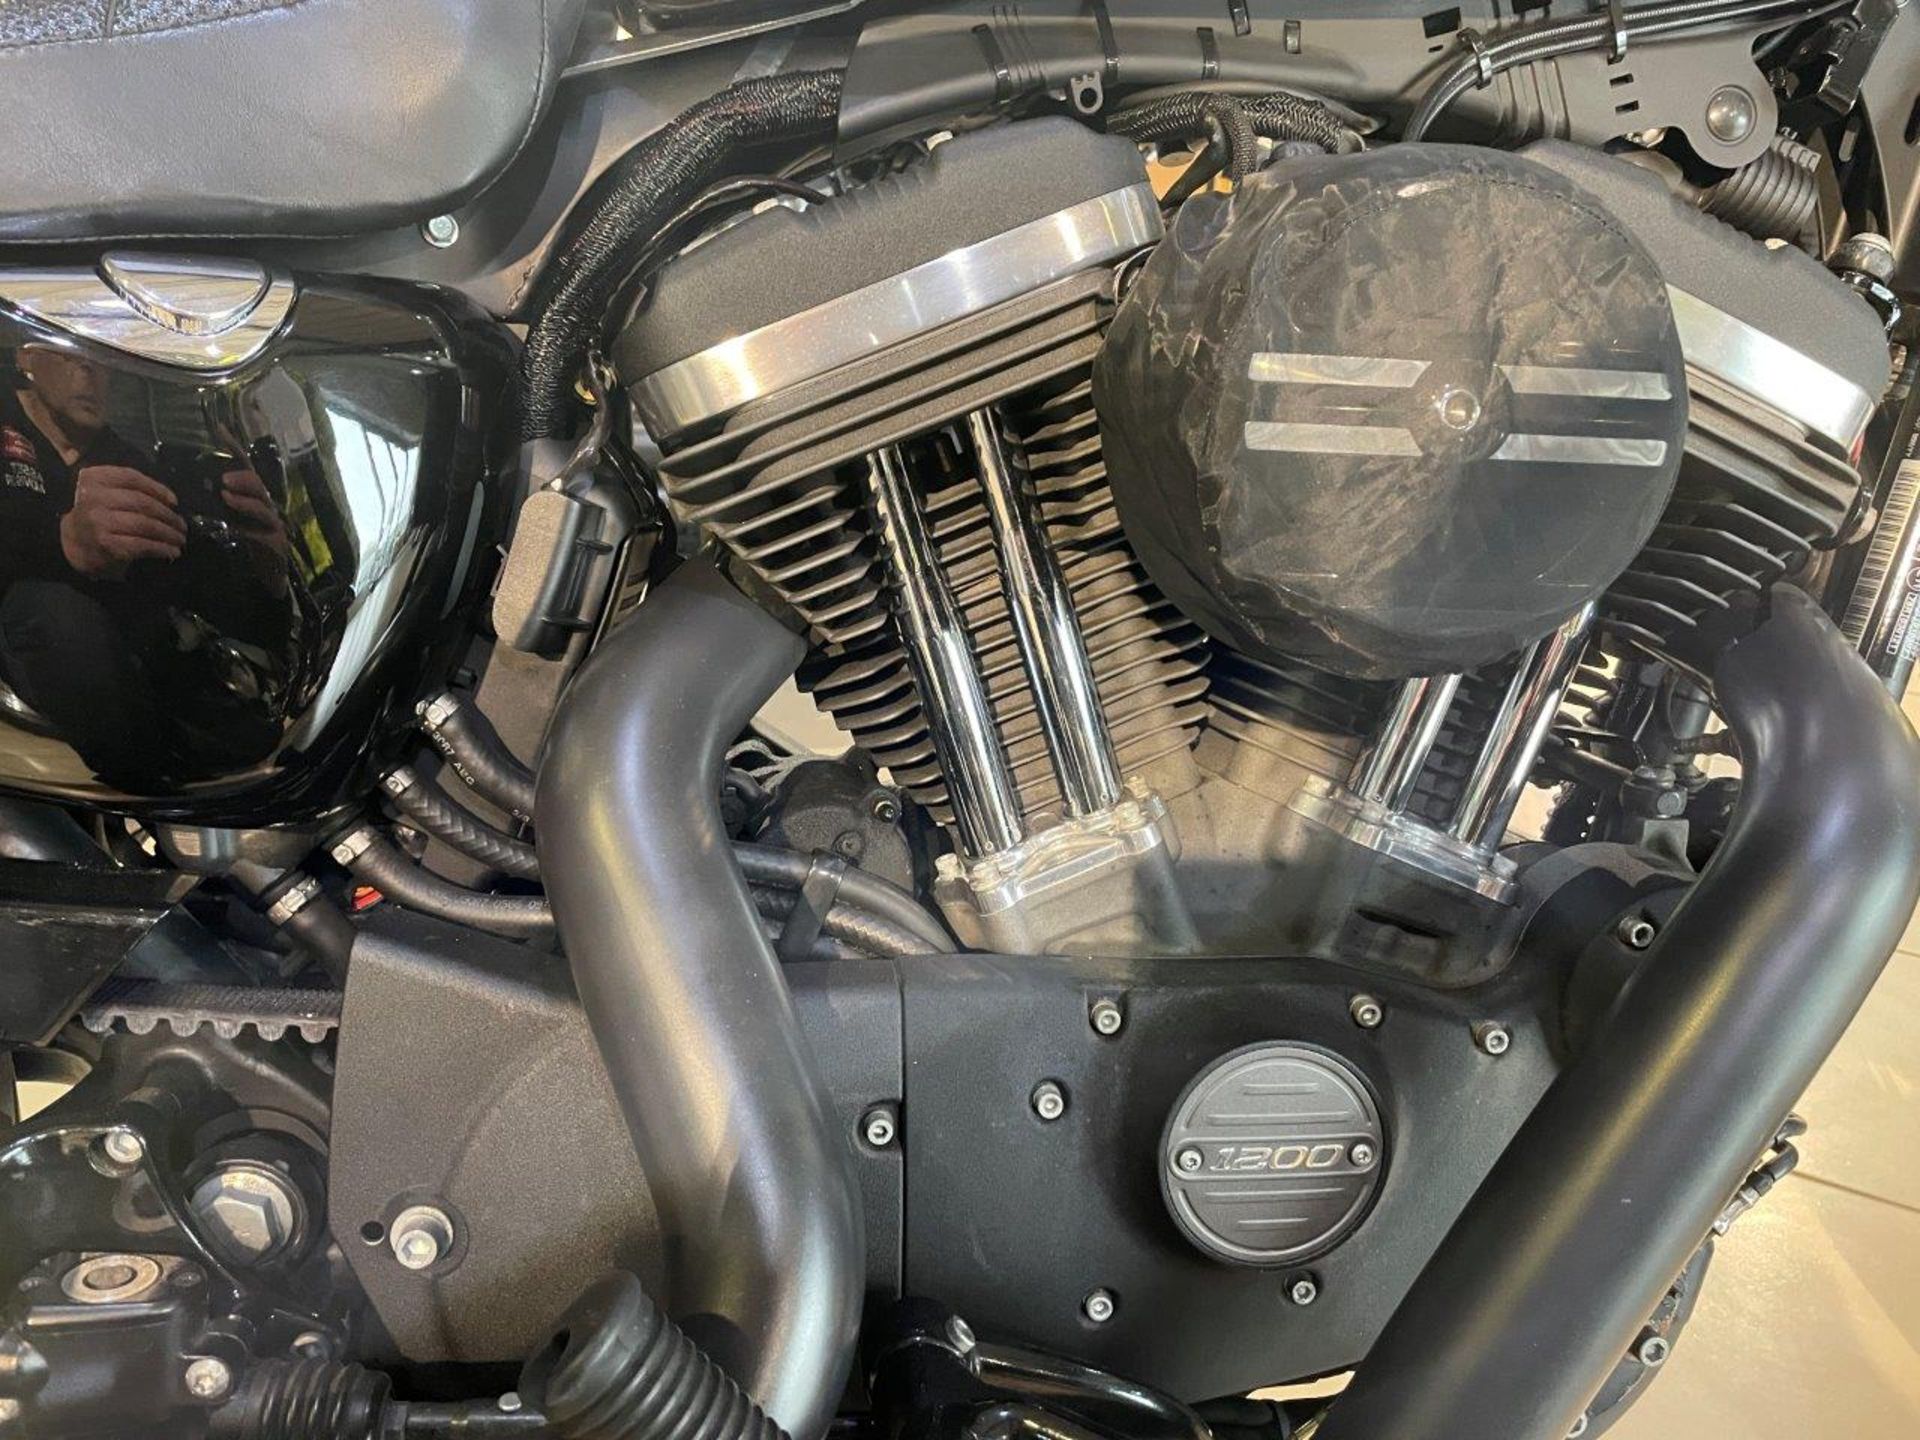 Harley Davidson XL 1200 CX Roadster 16 Motorbike (April 2016) - Image 5 of 11